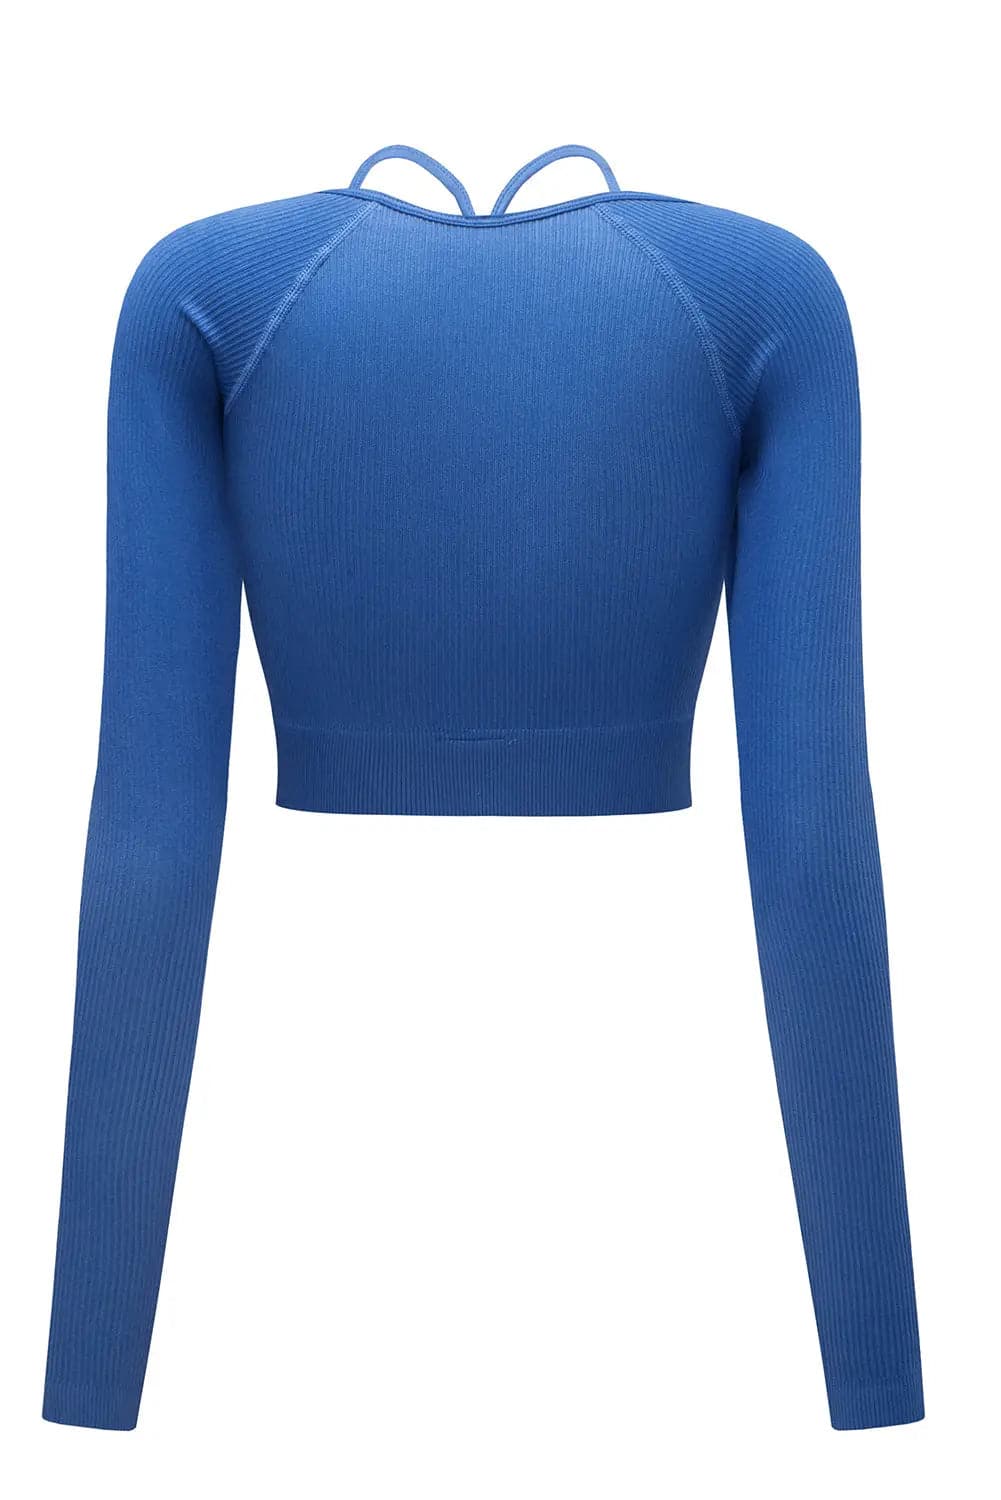 Women's Black Ribbed Crop Yoga Top | Long Sleeve Activewear - BioBodyBoost - Premium Sports Tops from BioBodyBoost - Just £18.96! Shop now at BioBodyBoost